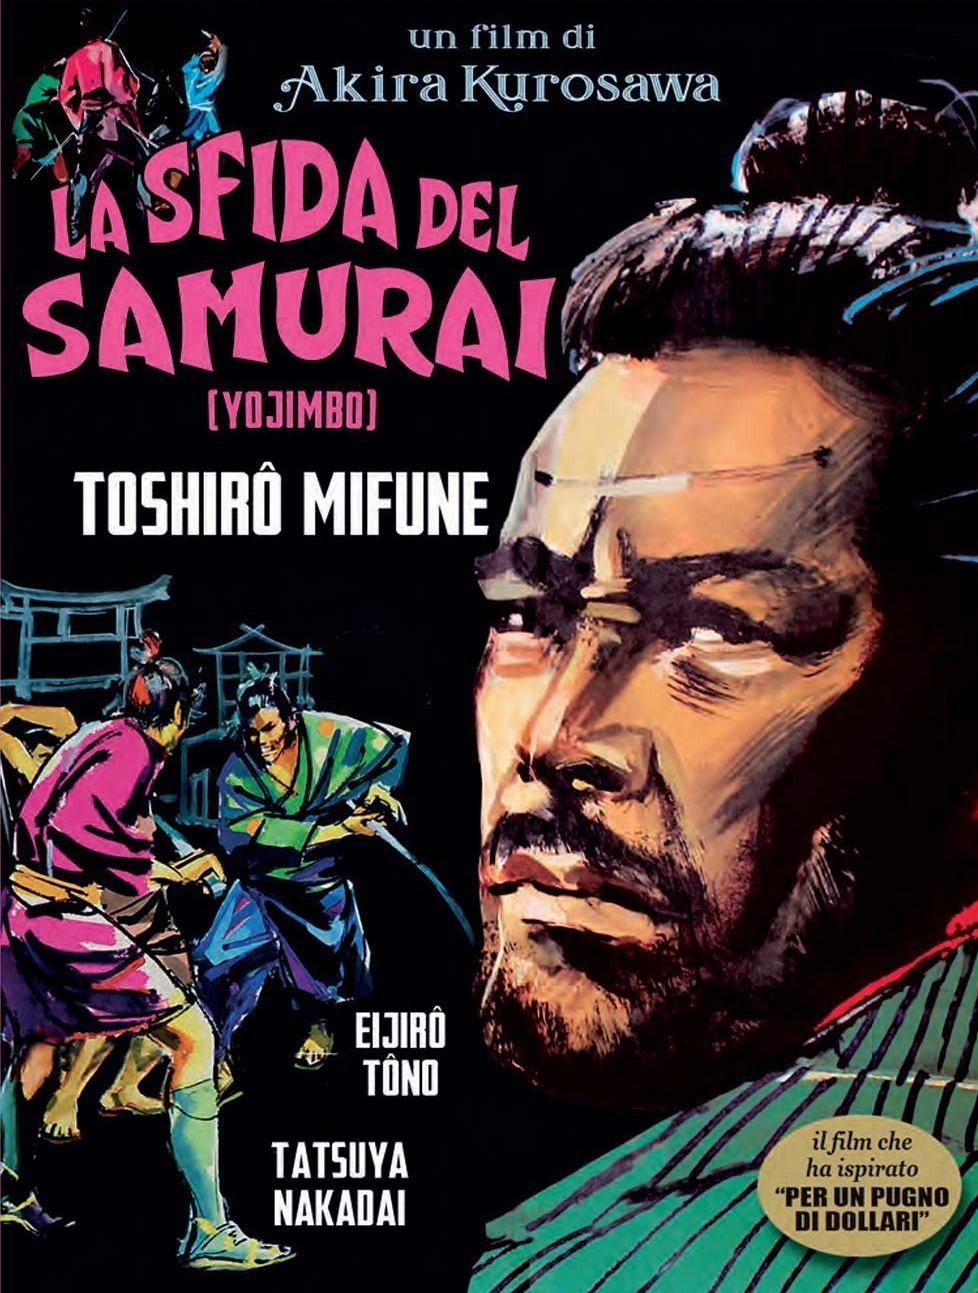 La sfida del samurai [B/N] [HD] (1961)